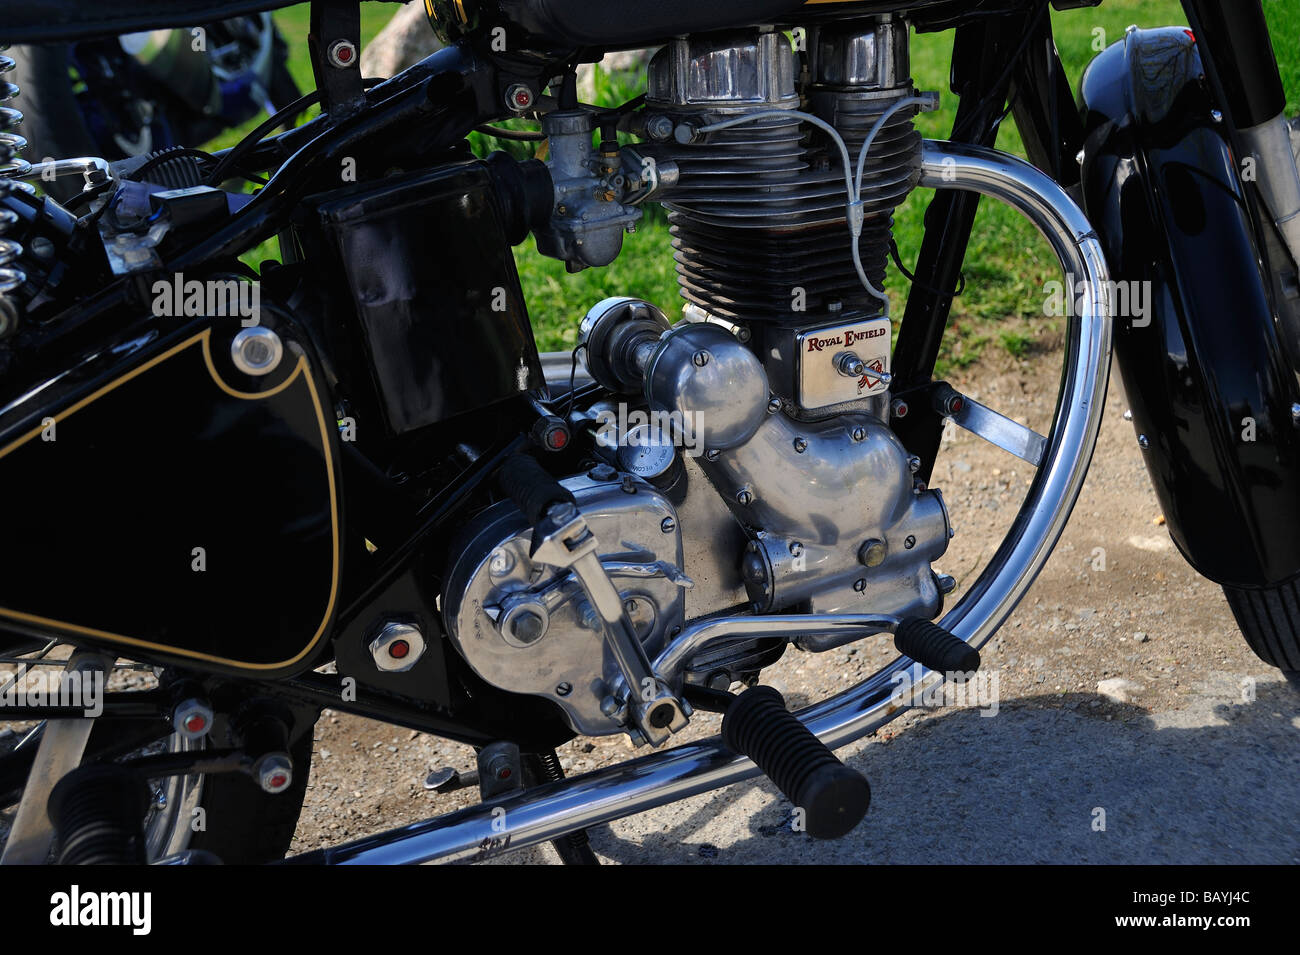 Close up shot of a Royal Enfield motorcycle engine Stock Photo